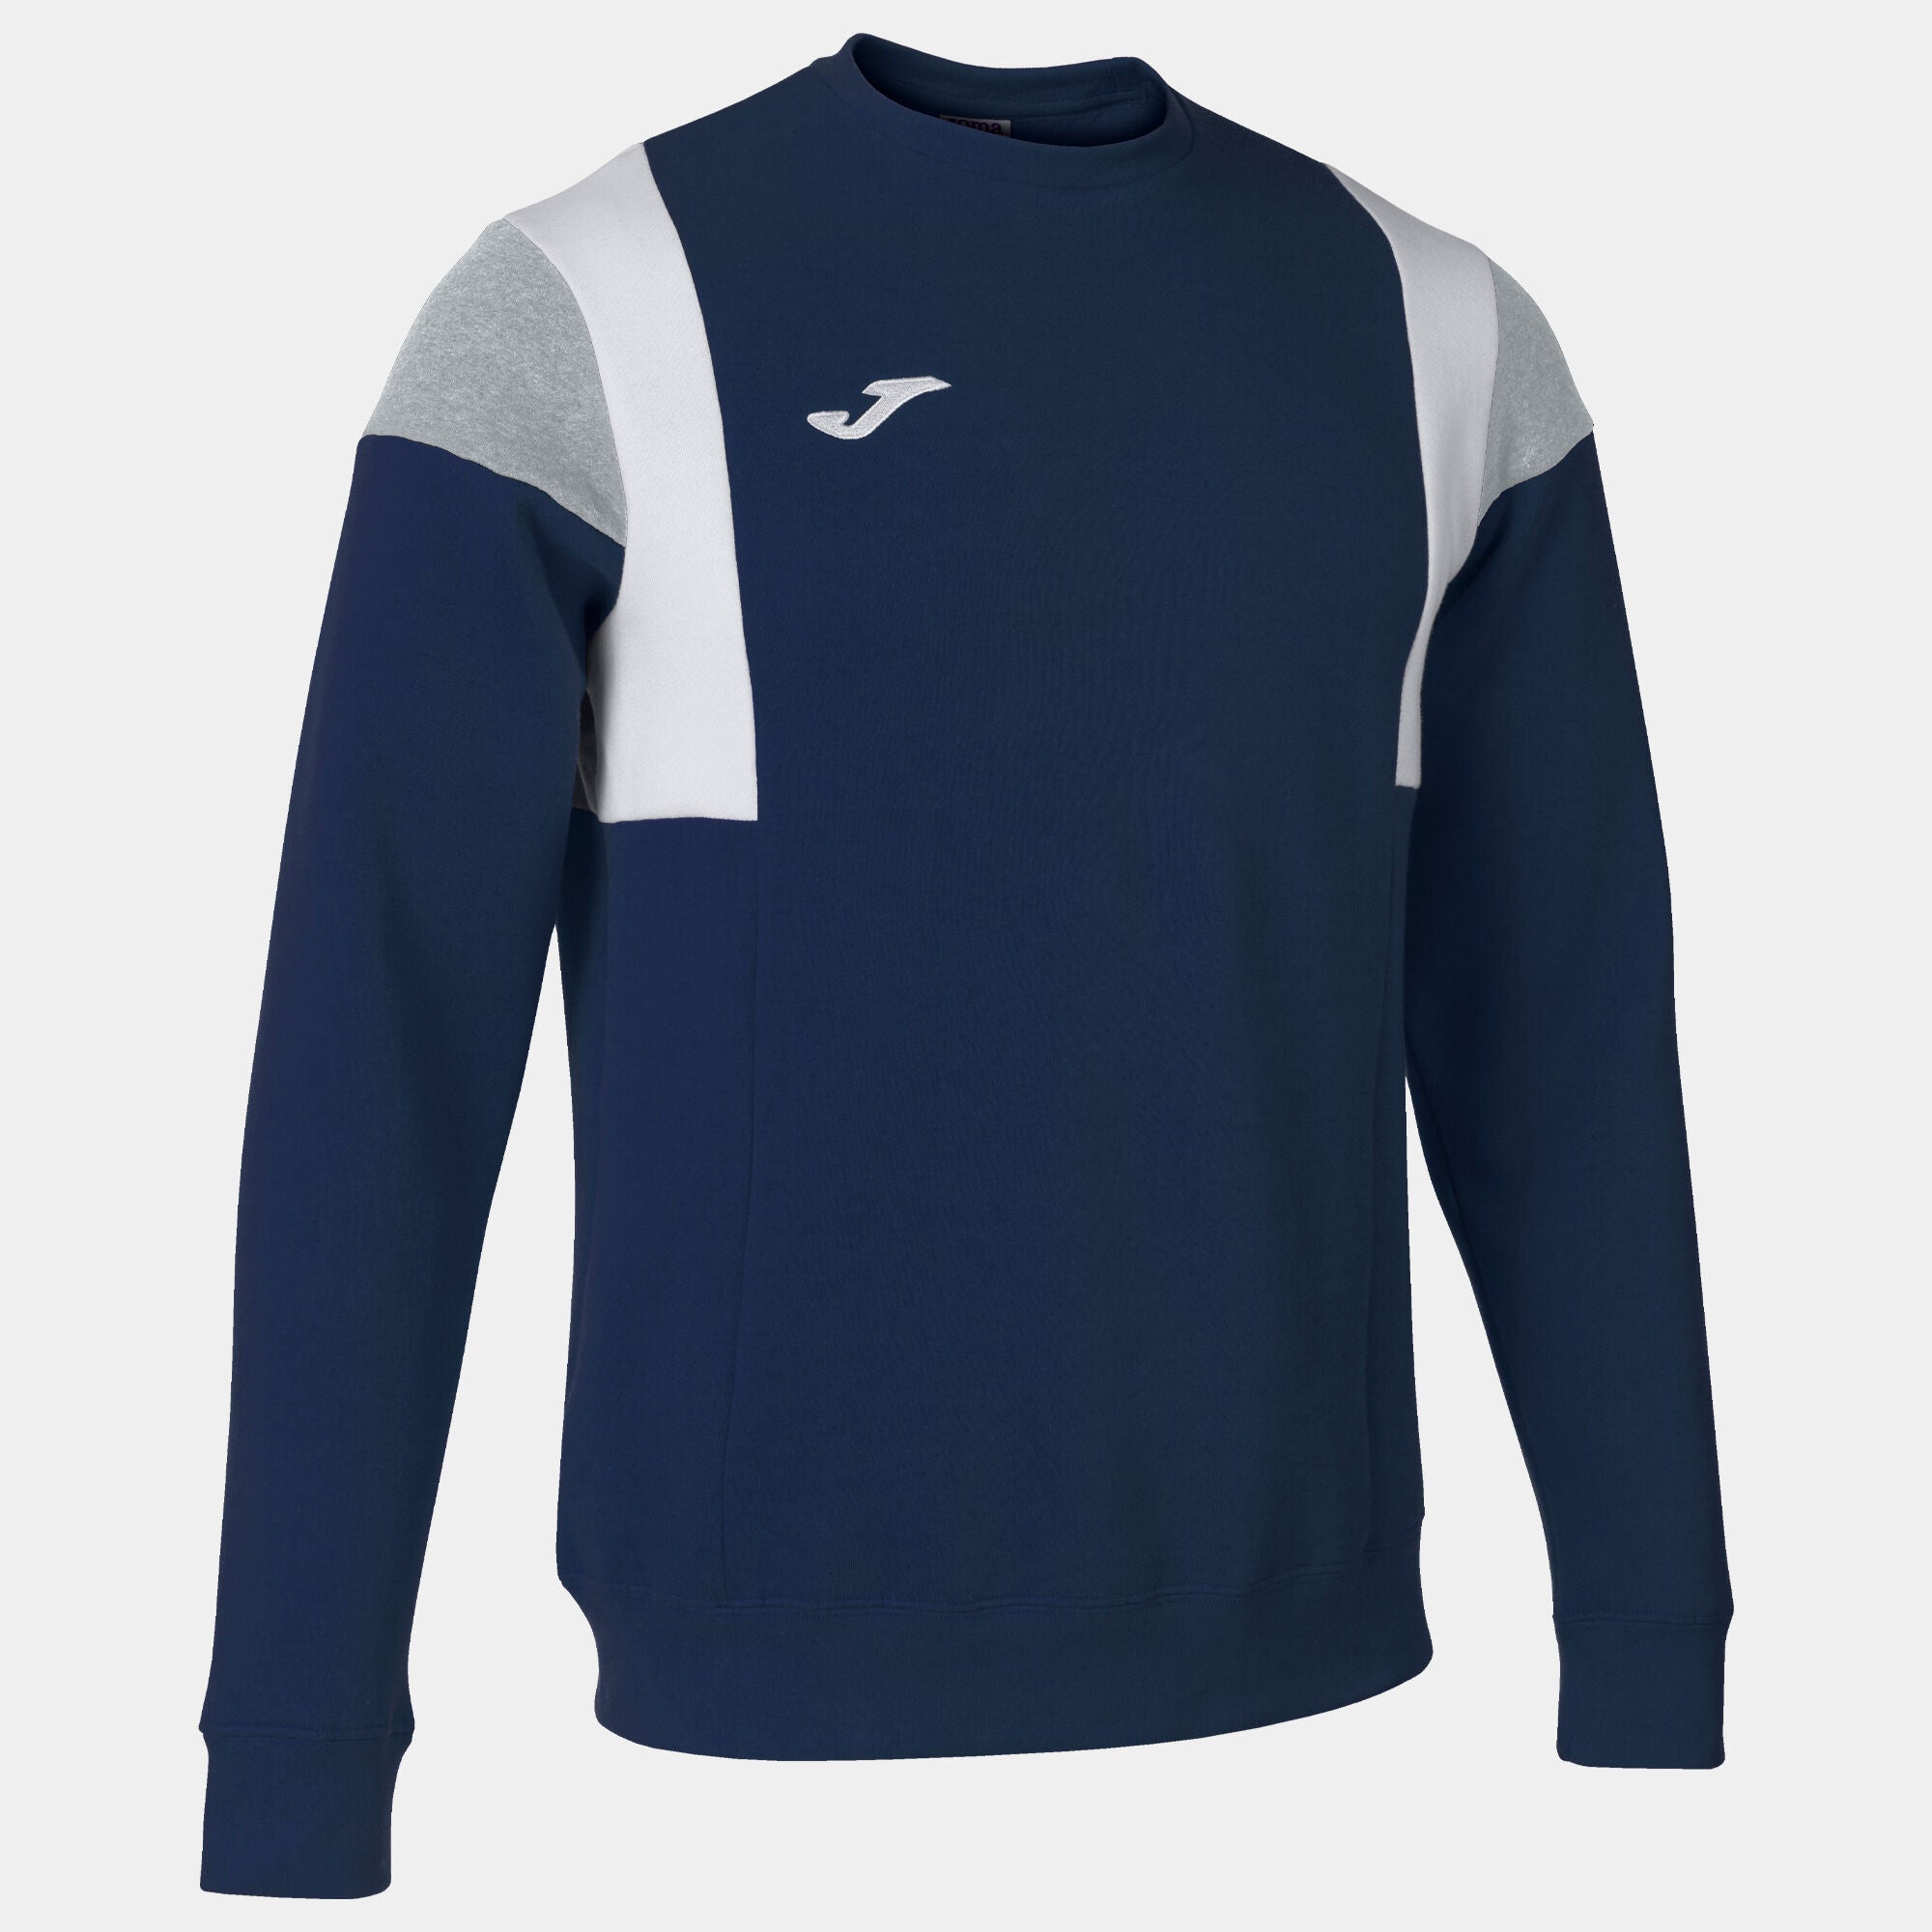 Joma Sweatshirt For Men-MSWS-2007-Navy Blue - FactoryX.pk